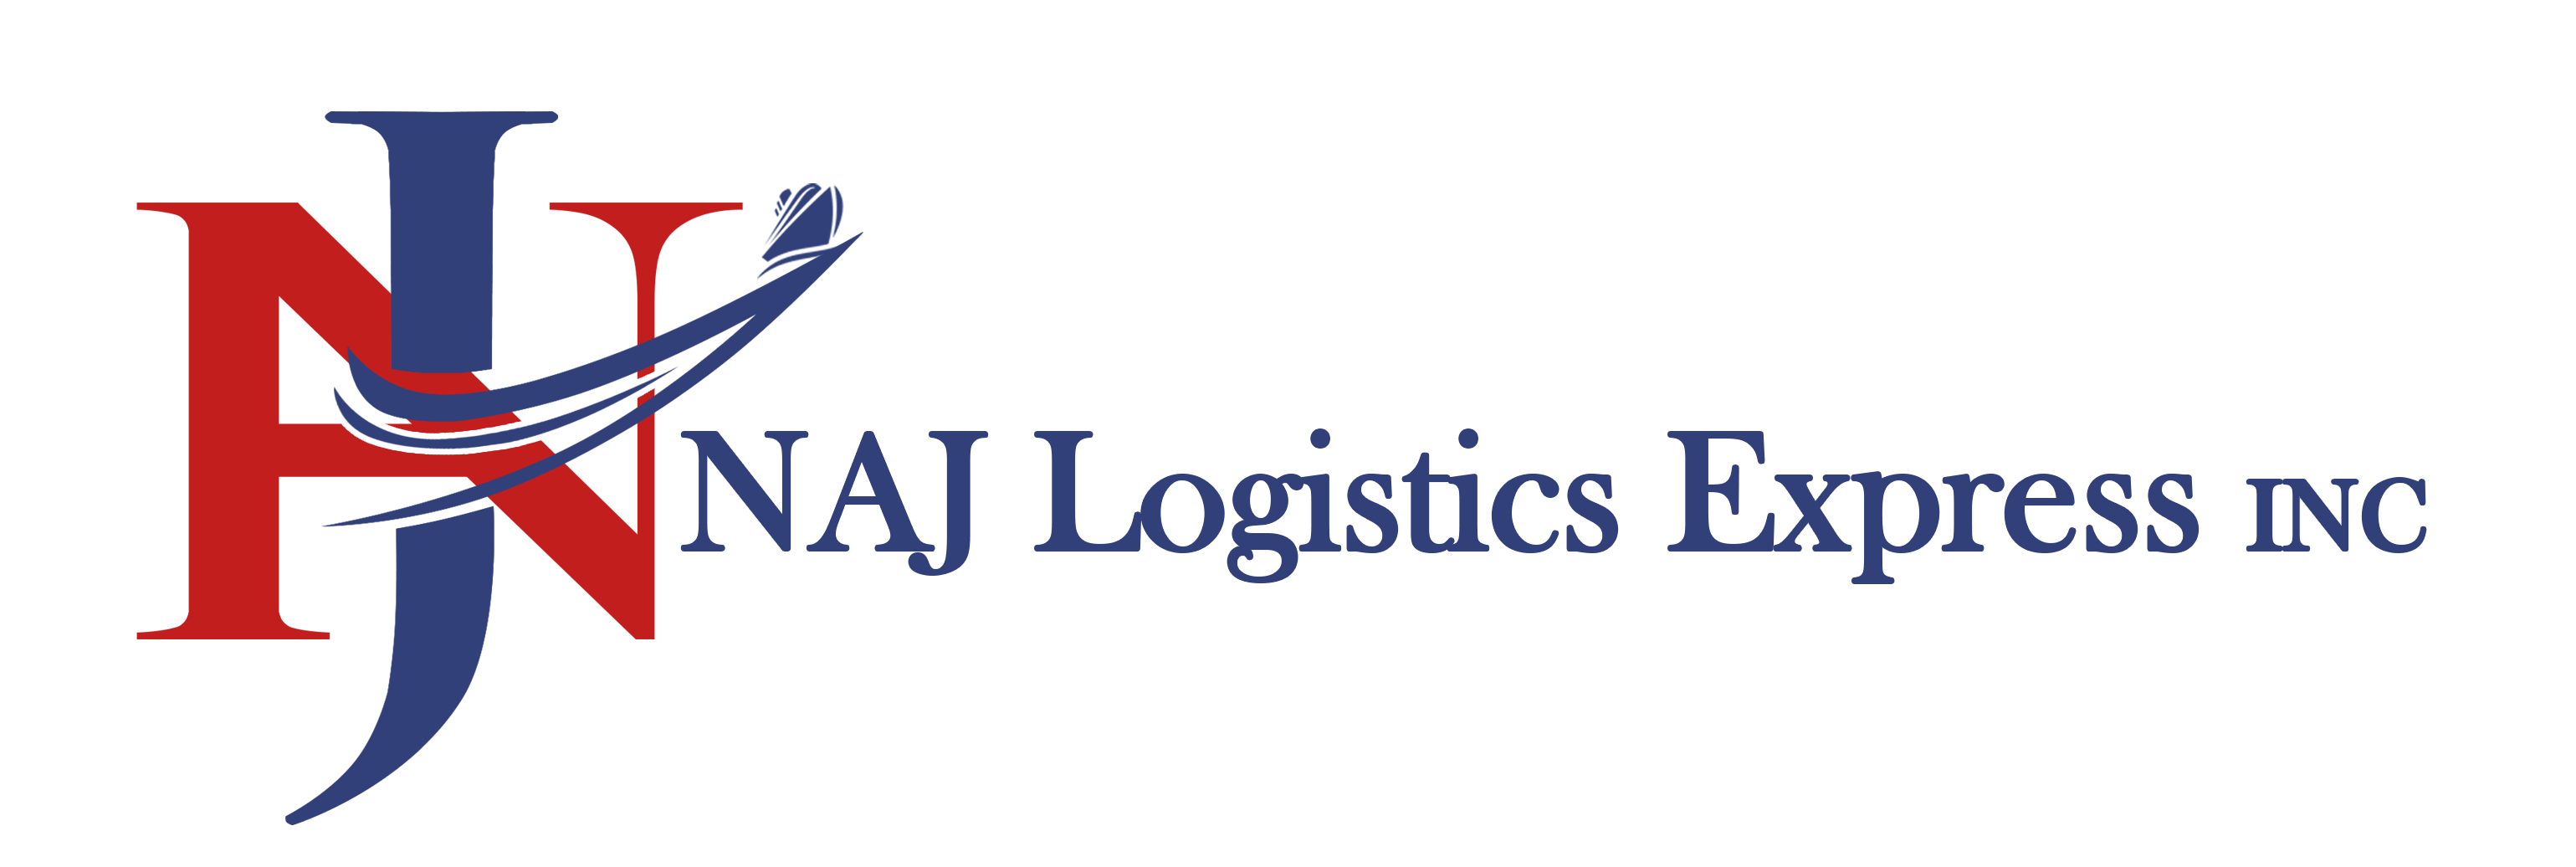 NAJ Logistics Express Inc.